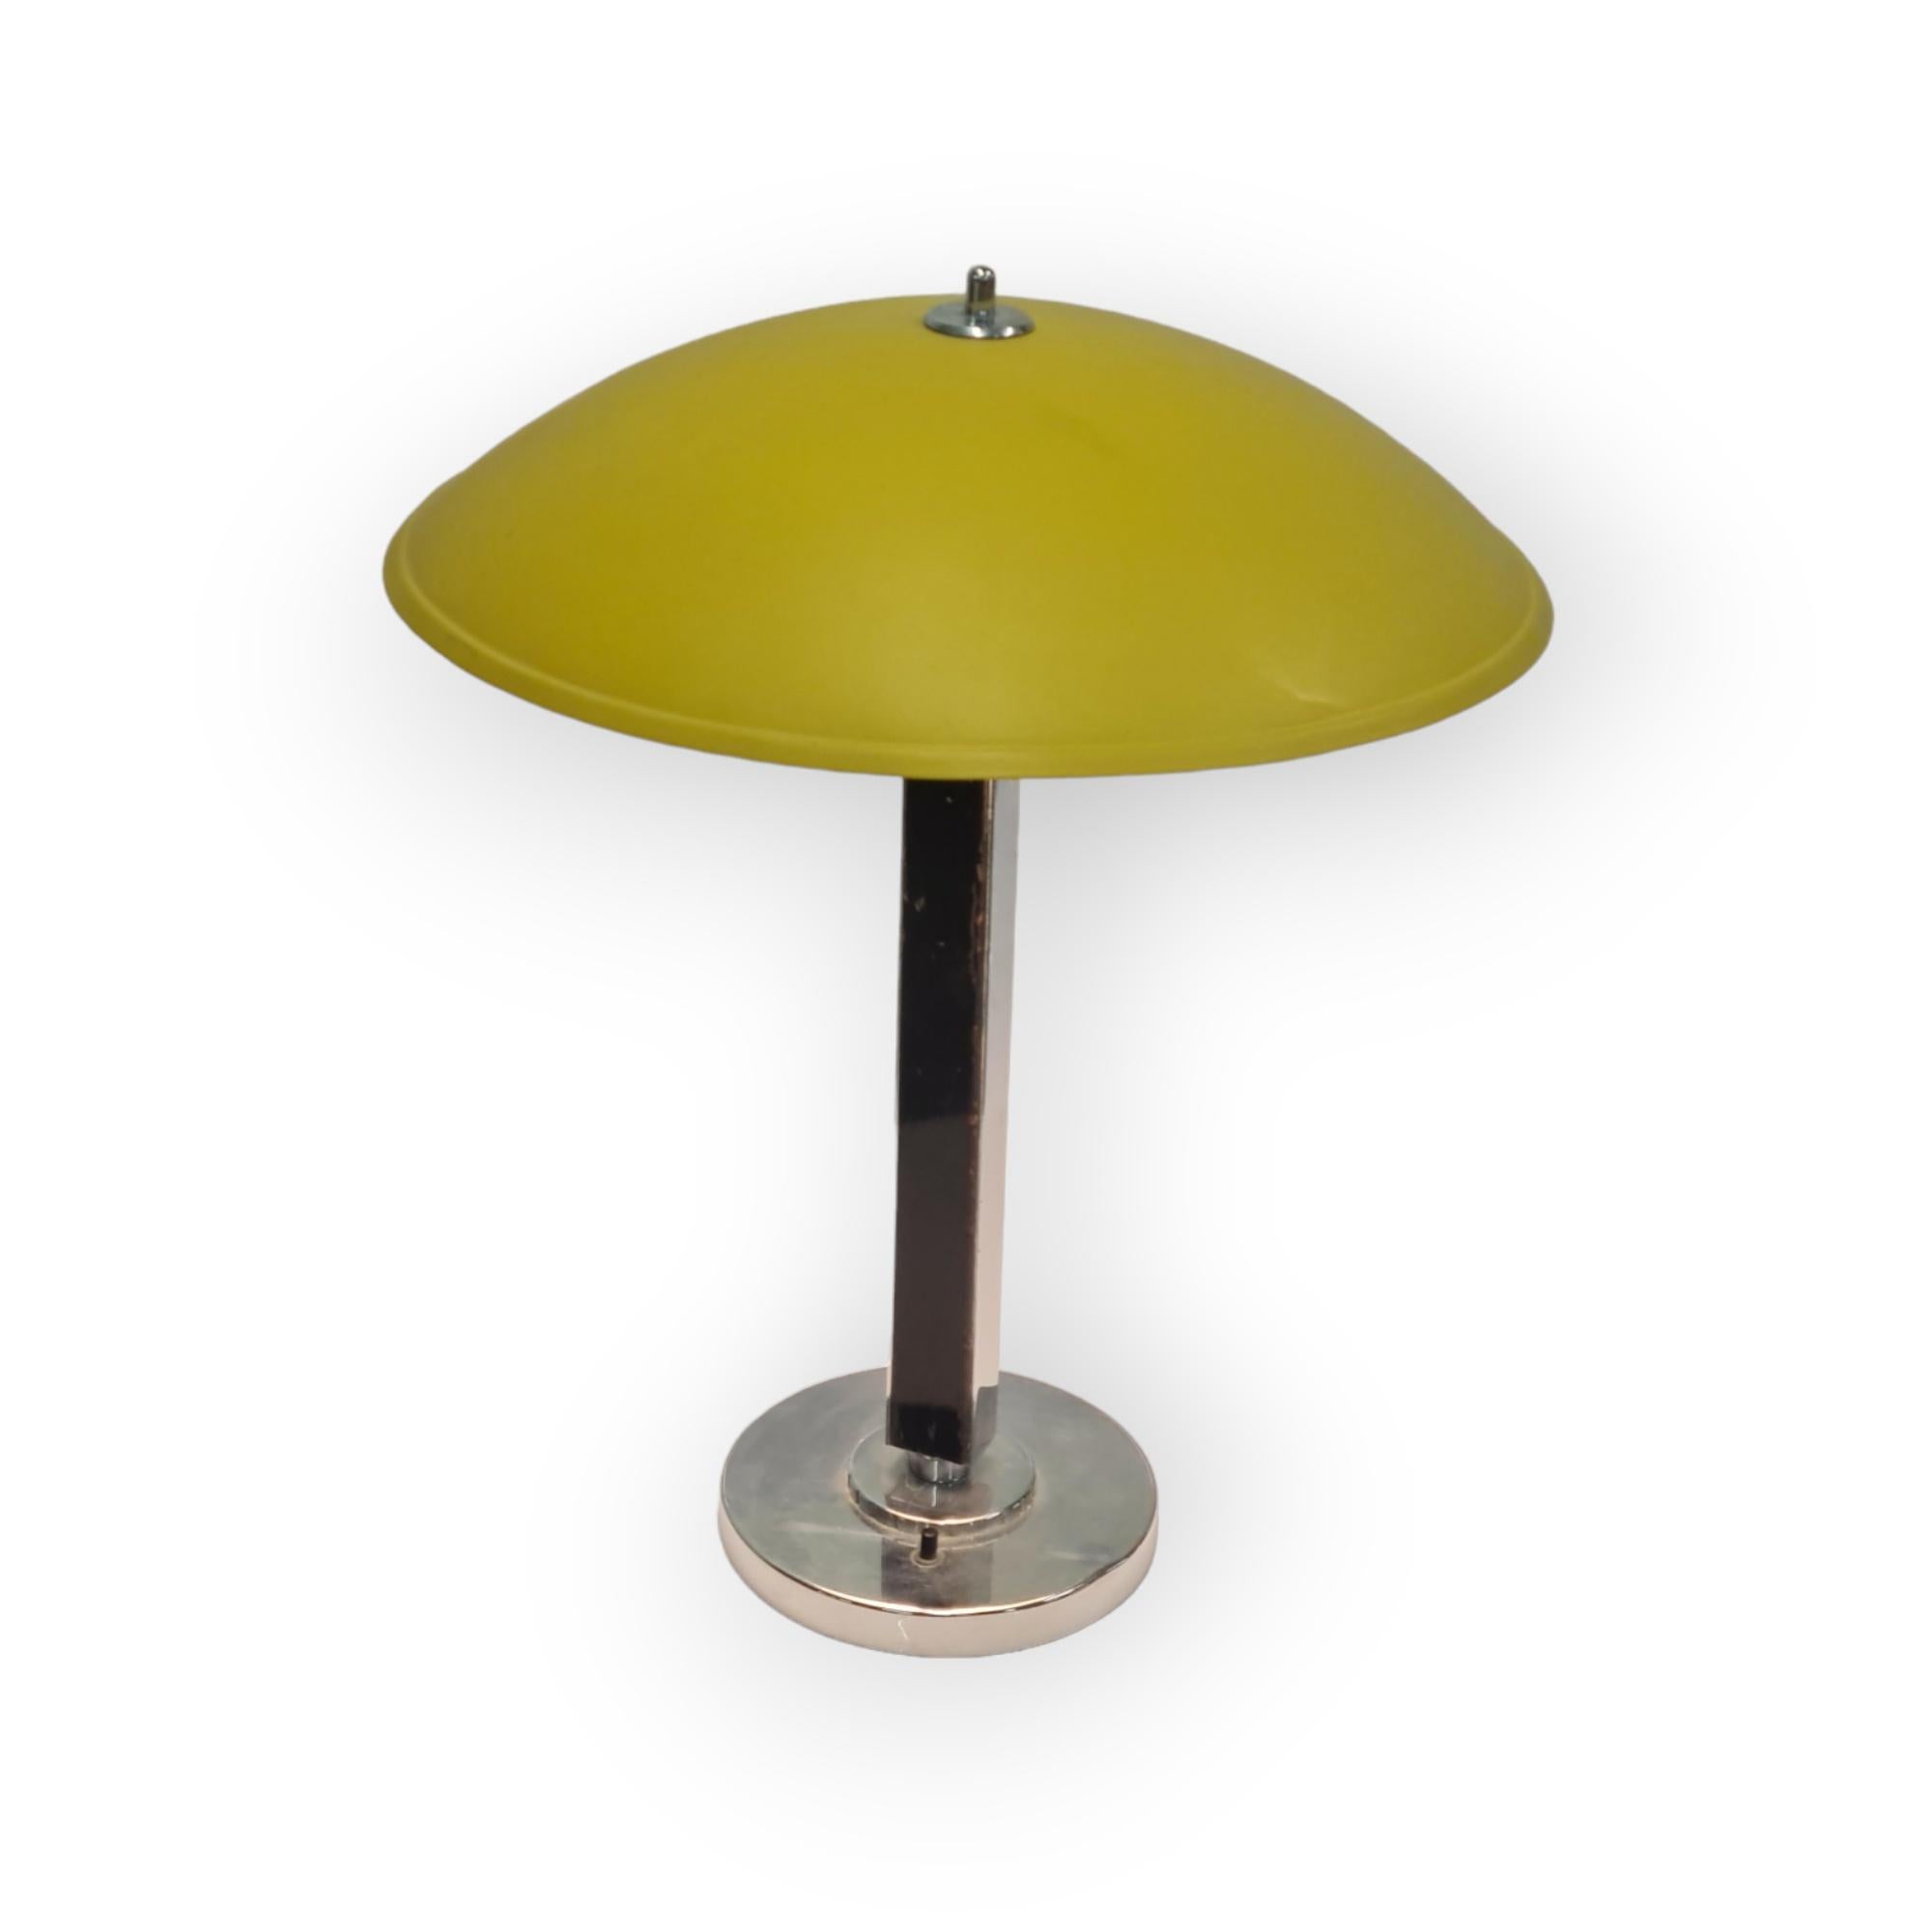 Exceedingly Rare Gunilla Jung Table Lamp Model 2004 for Orno For Sale 2